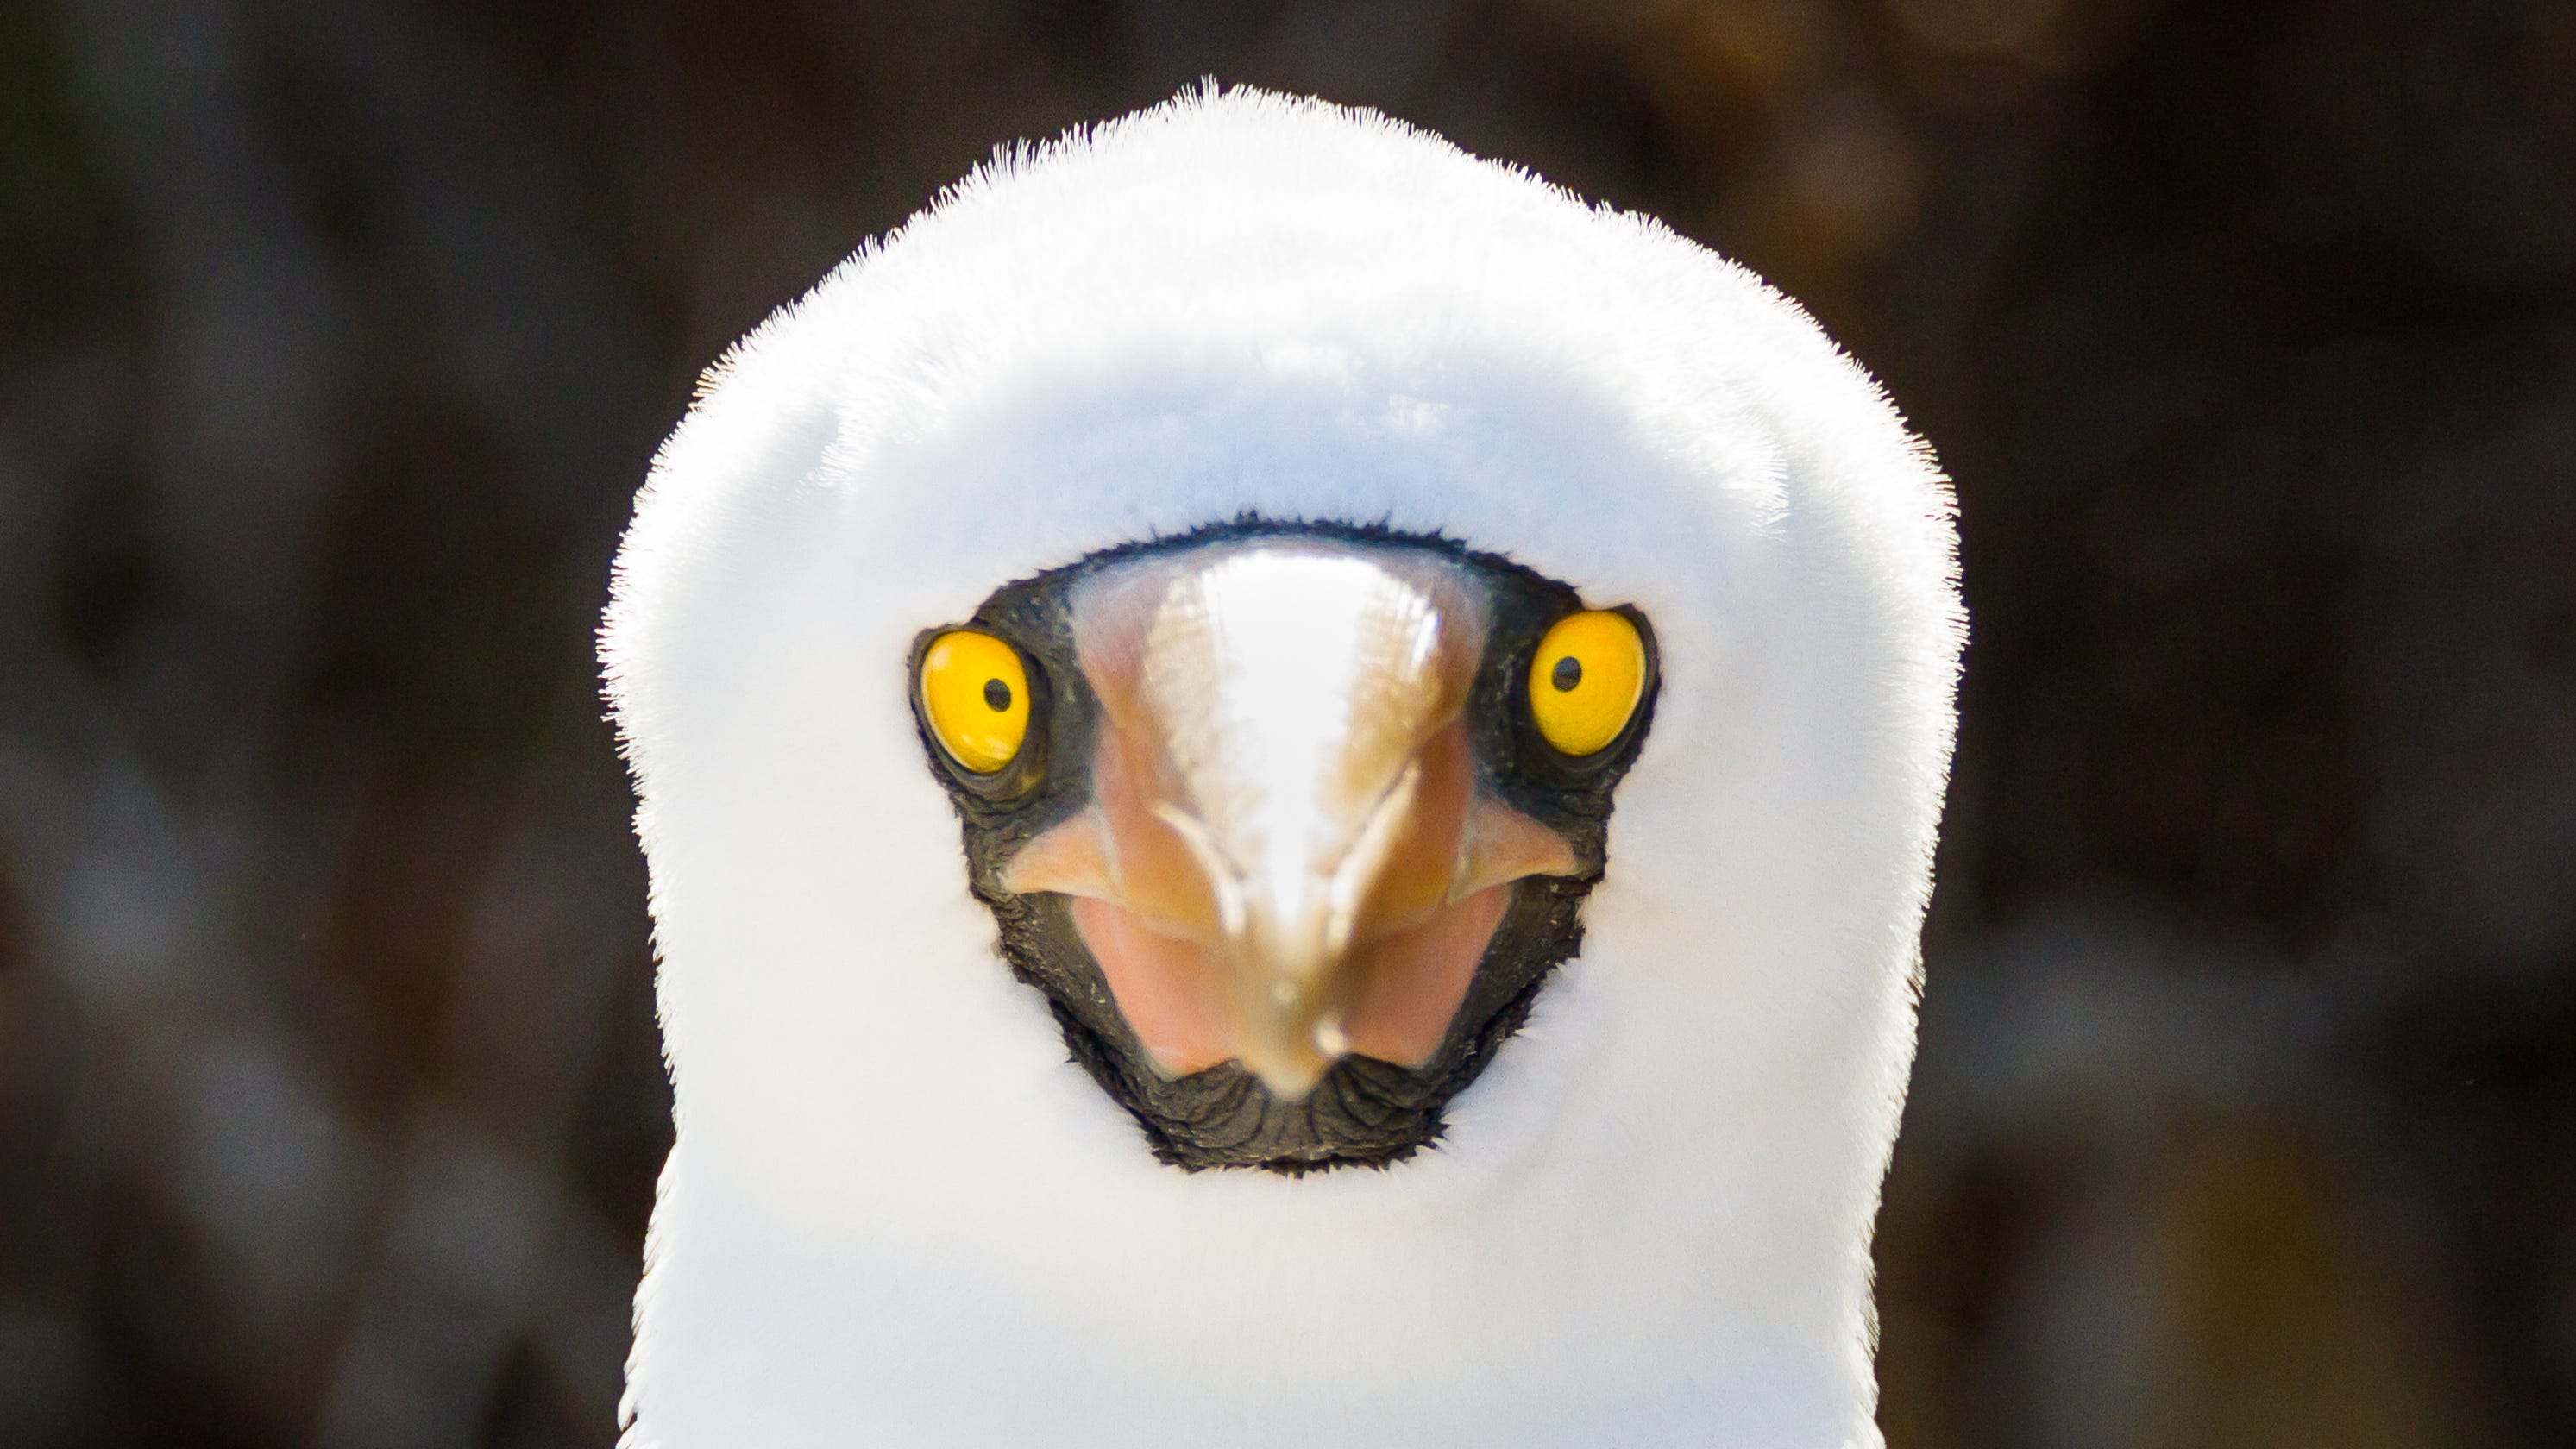 Galapagos Islands wildlife: Photos of unusual animals